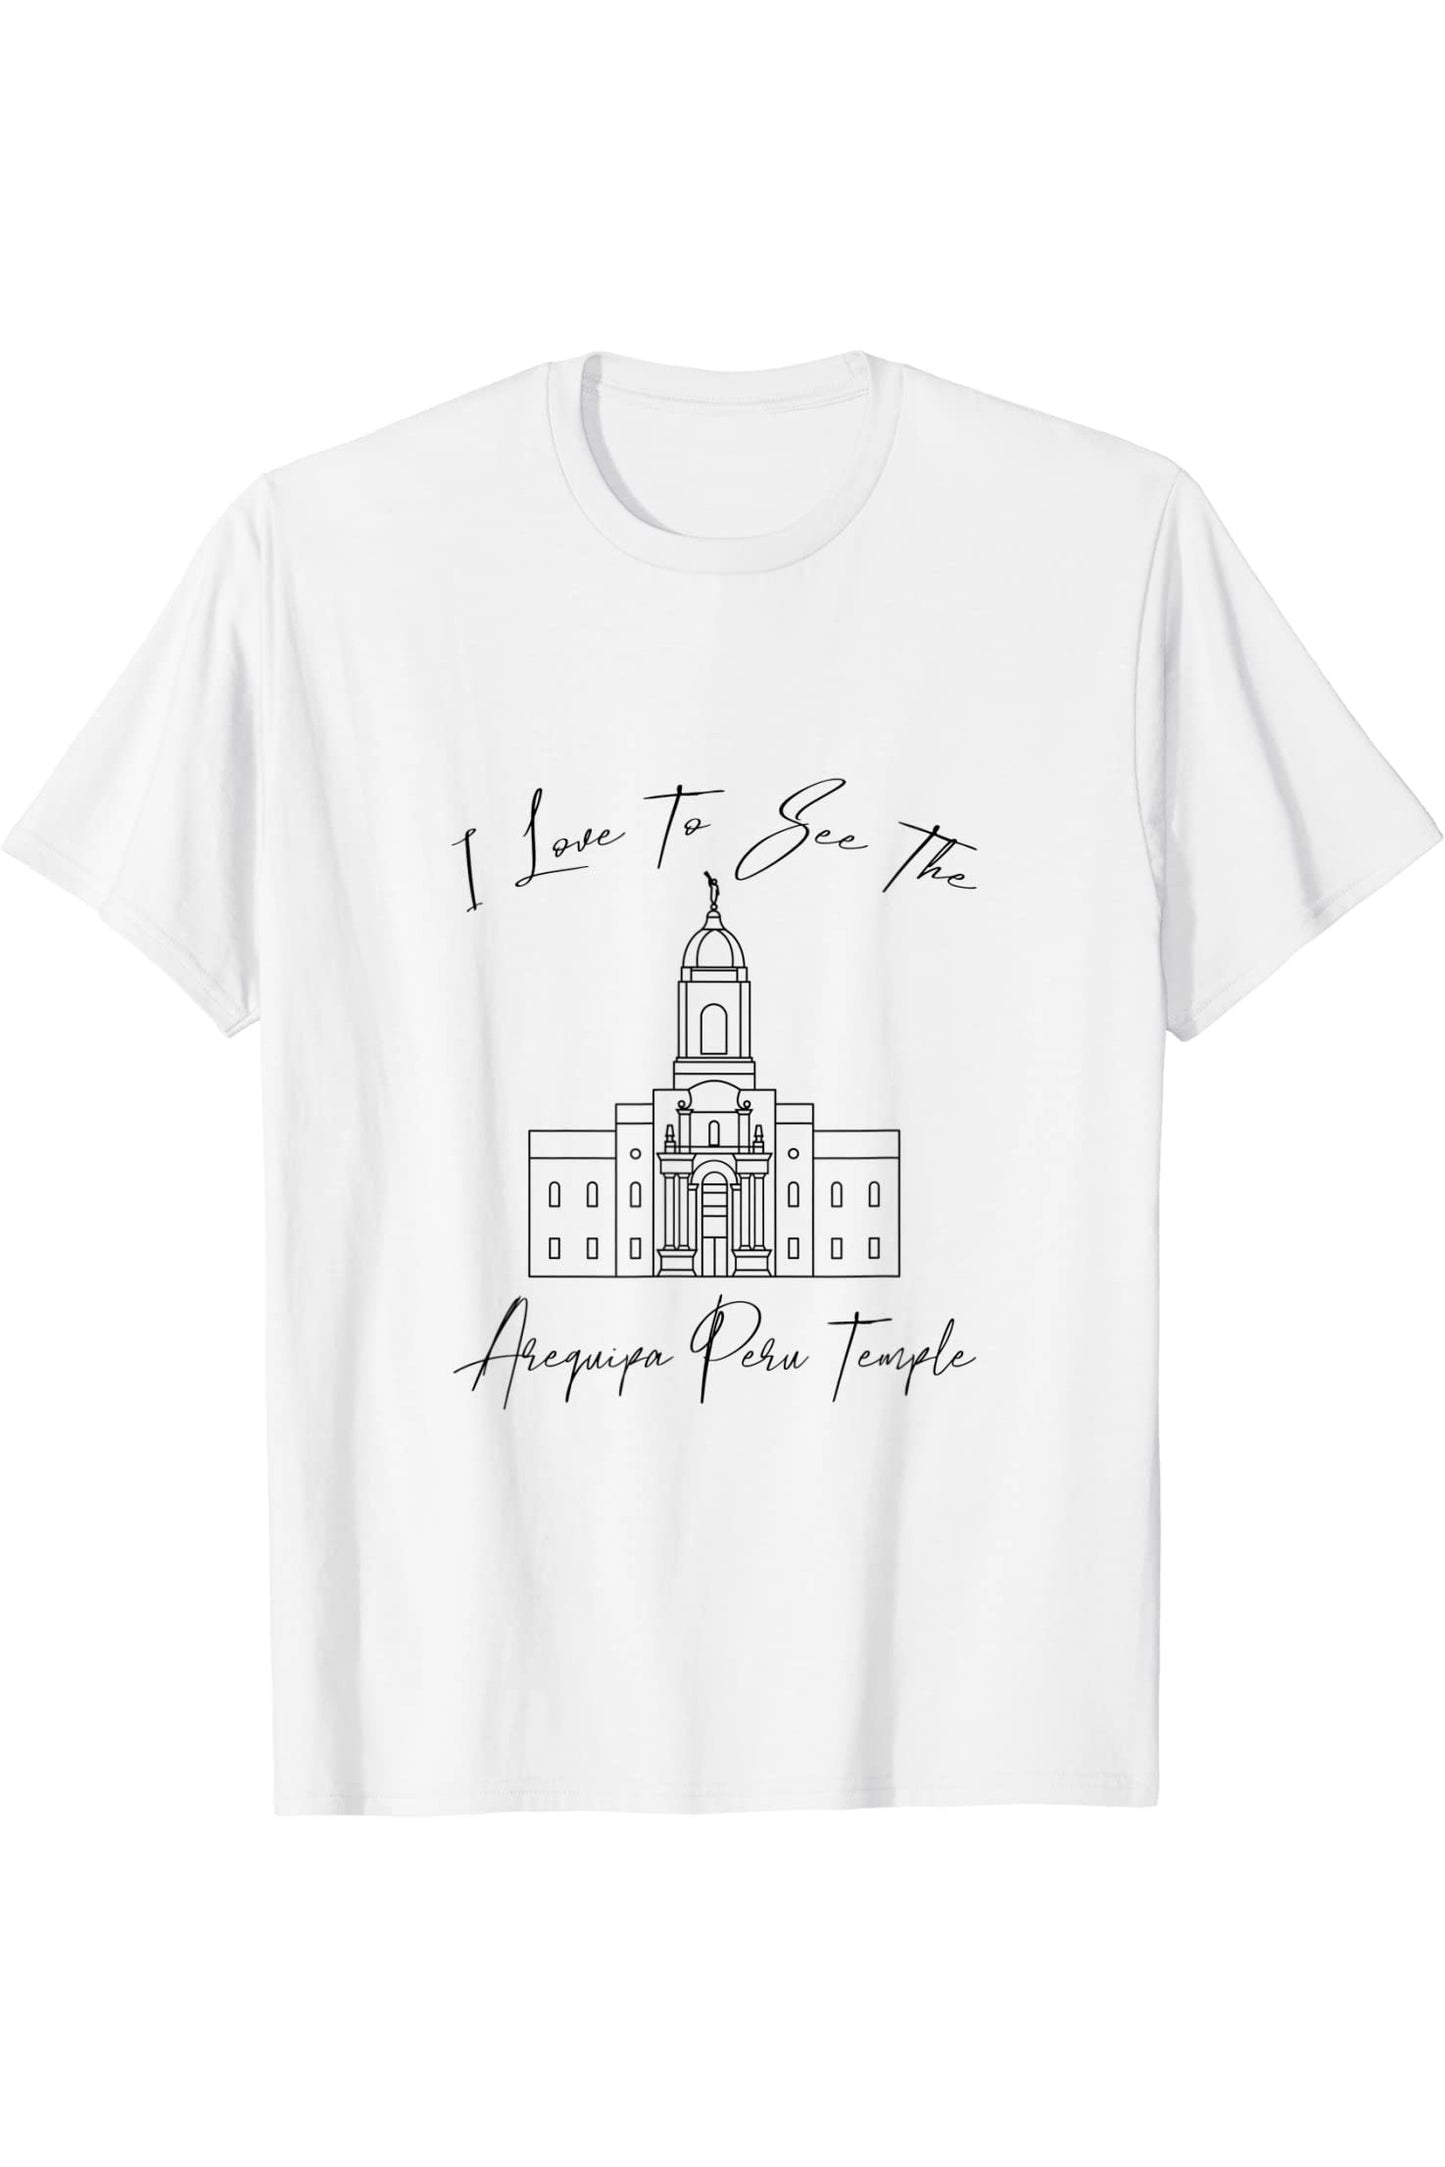 Arequipa Peru Temple T-Shirt - Calligraphy Style (English) US